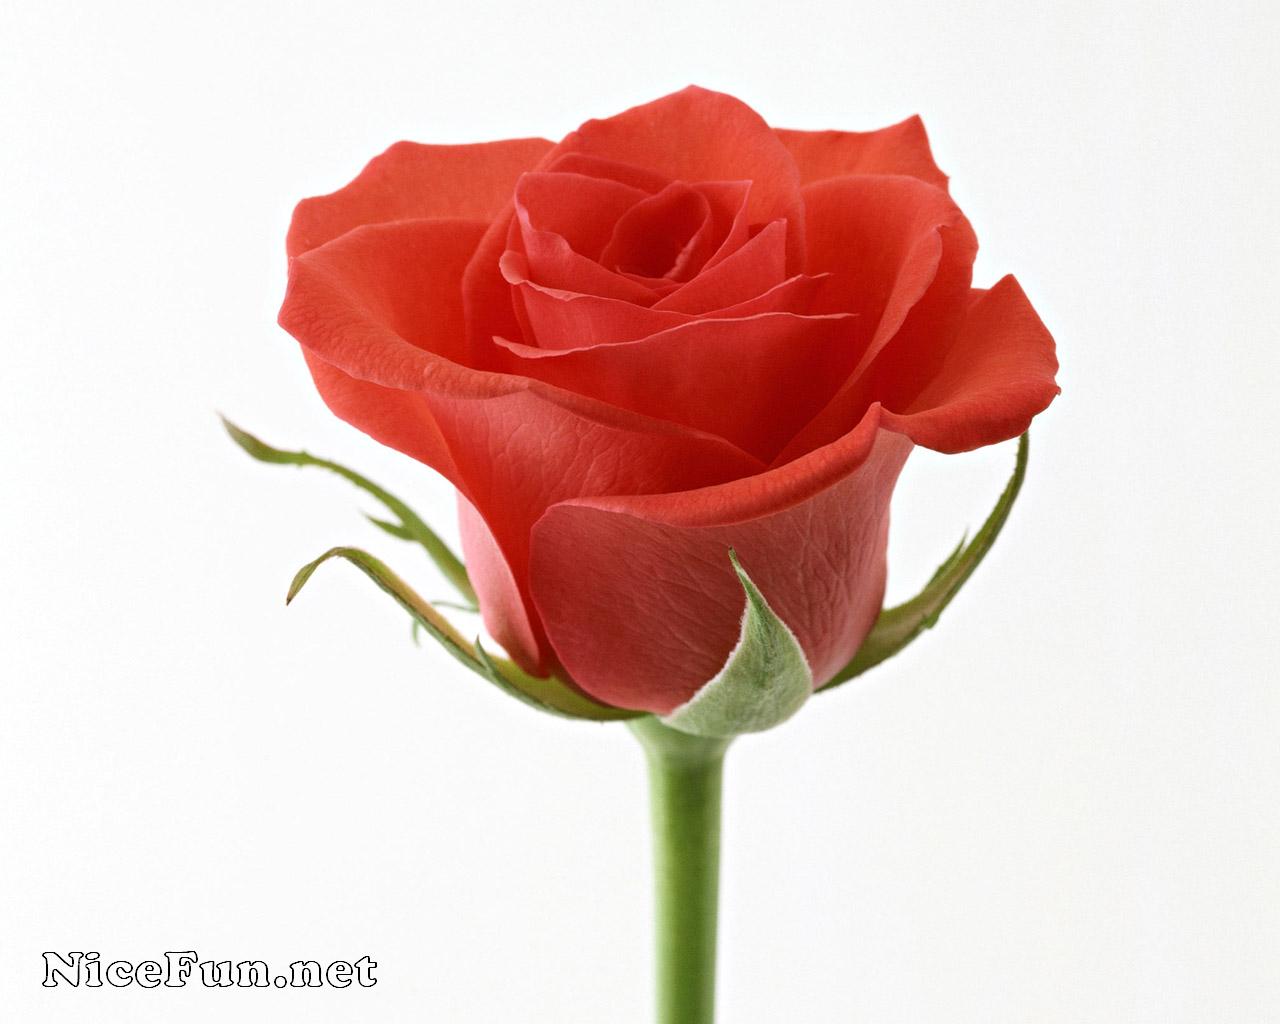 most beautiful roses wallpapers,flower,garden roses,rose,red,petal